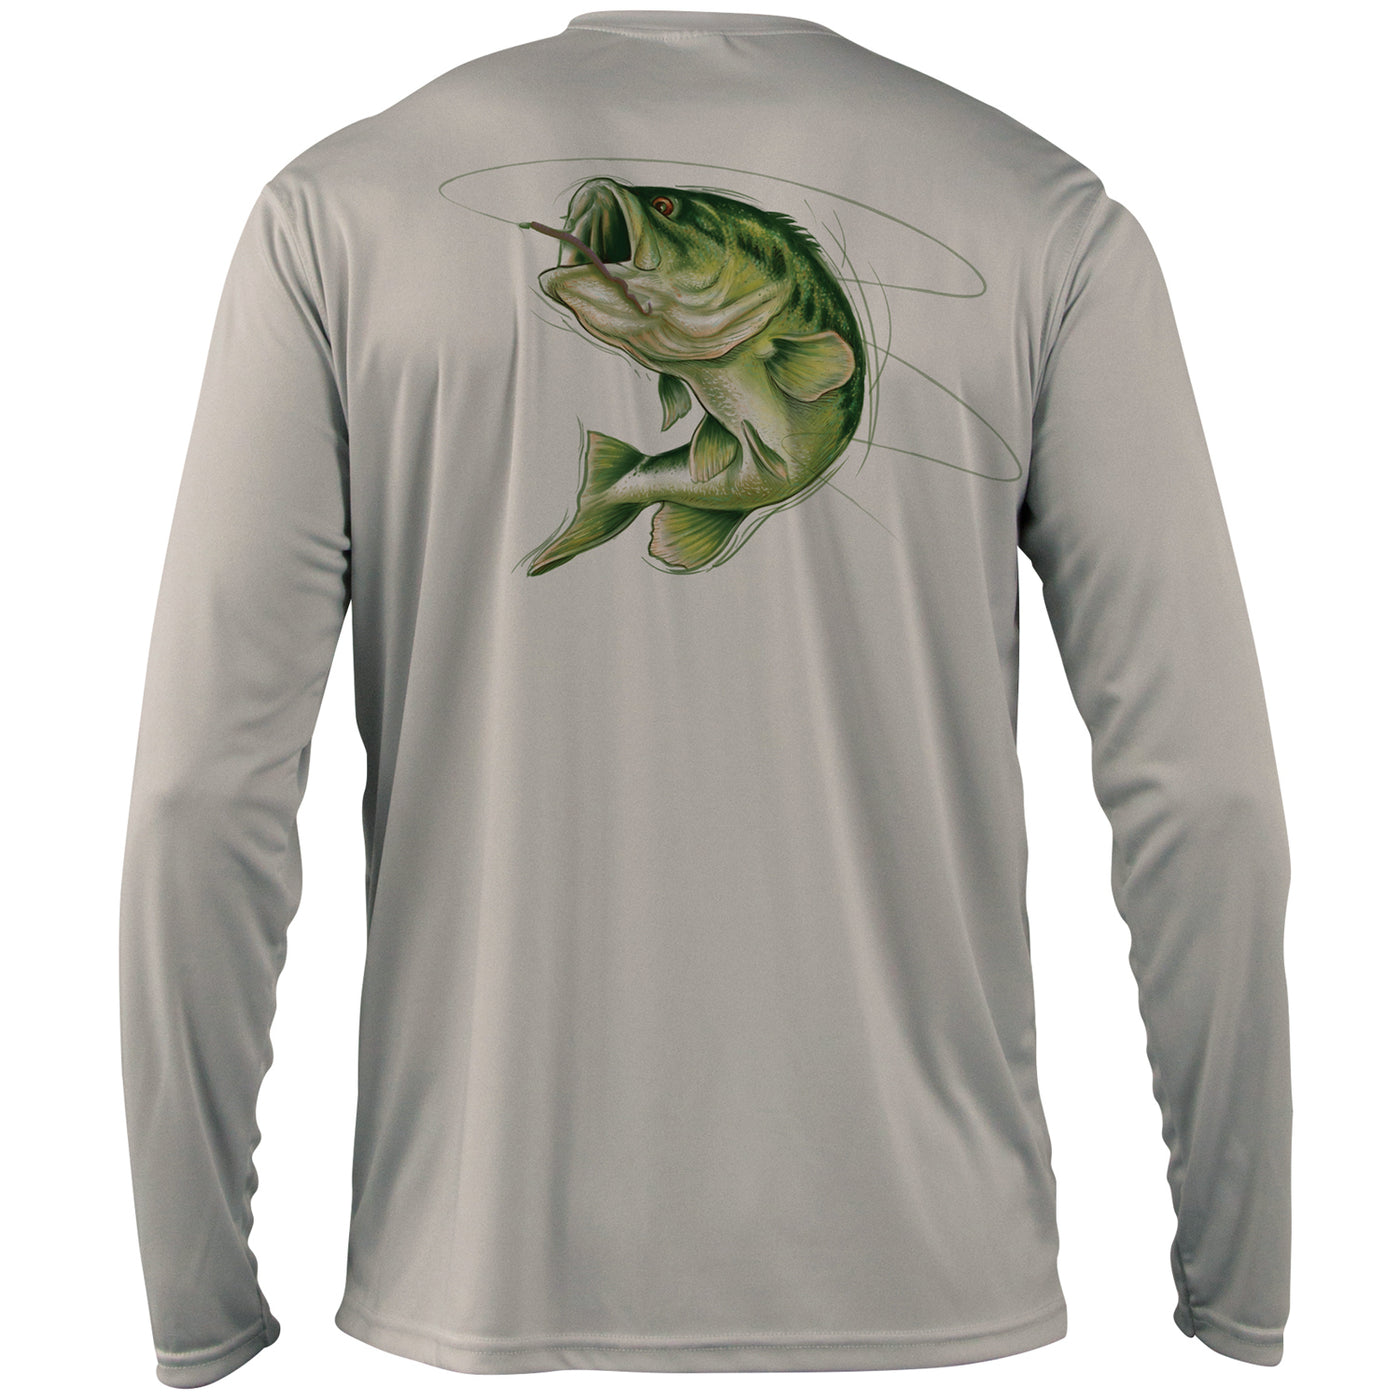 Mossy Oak Fishing Graphic Sun Protection Long Sleeve Shirt – The